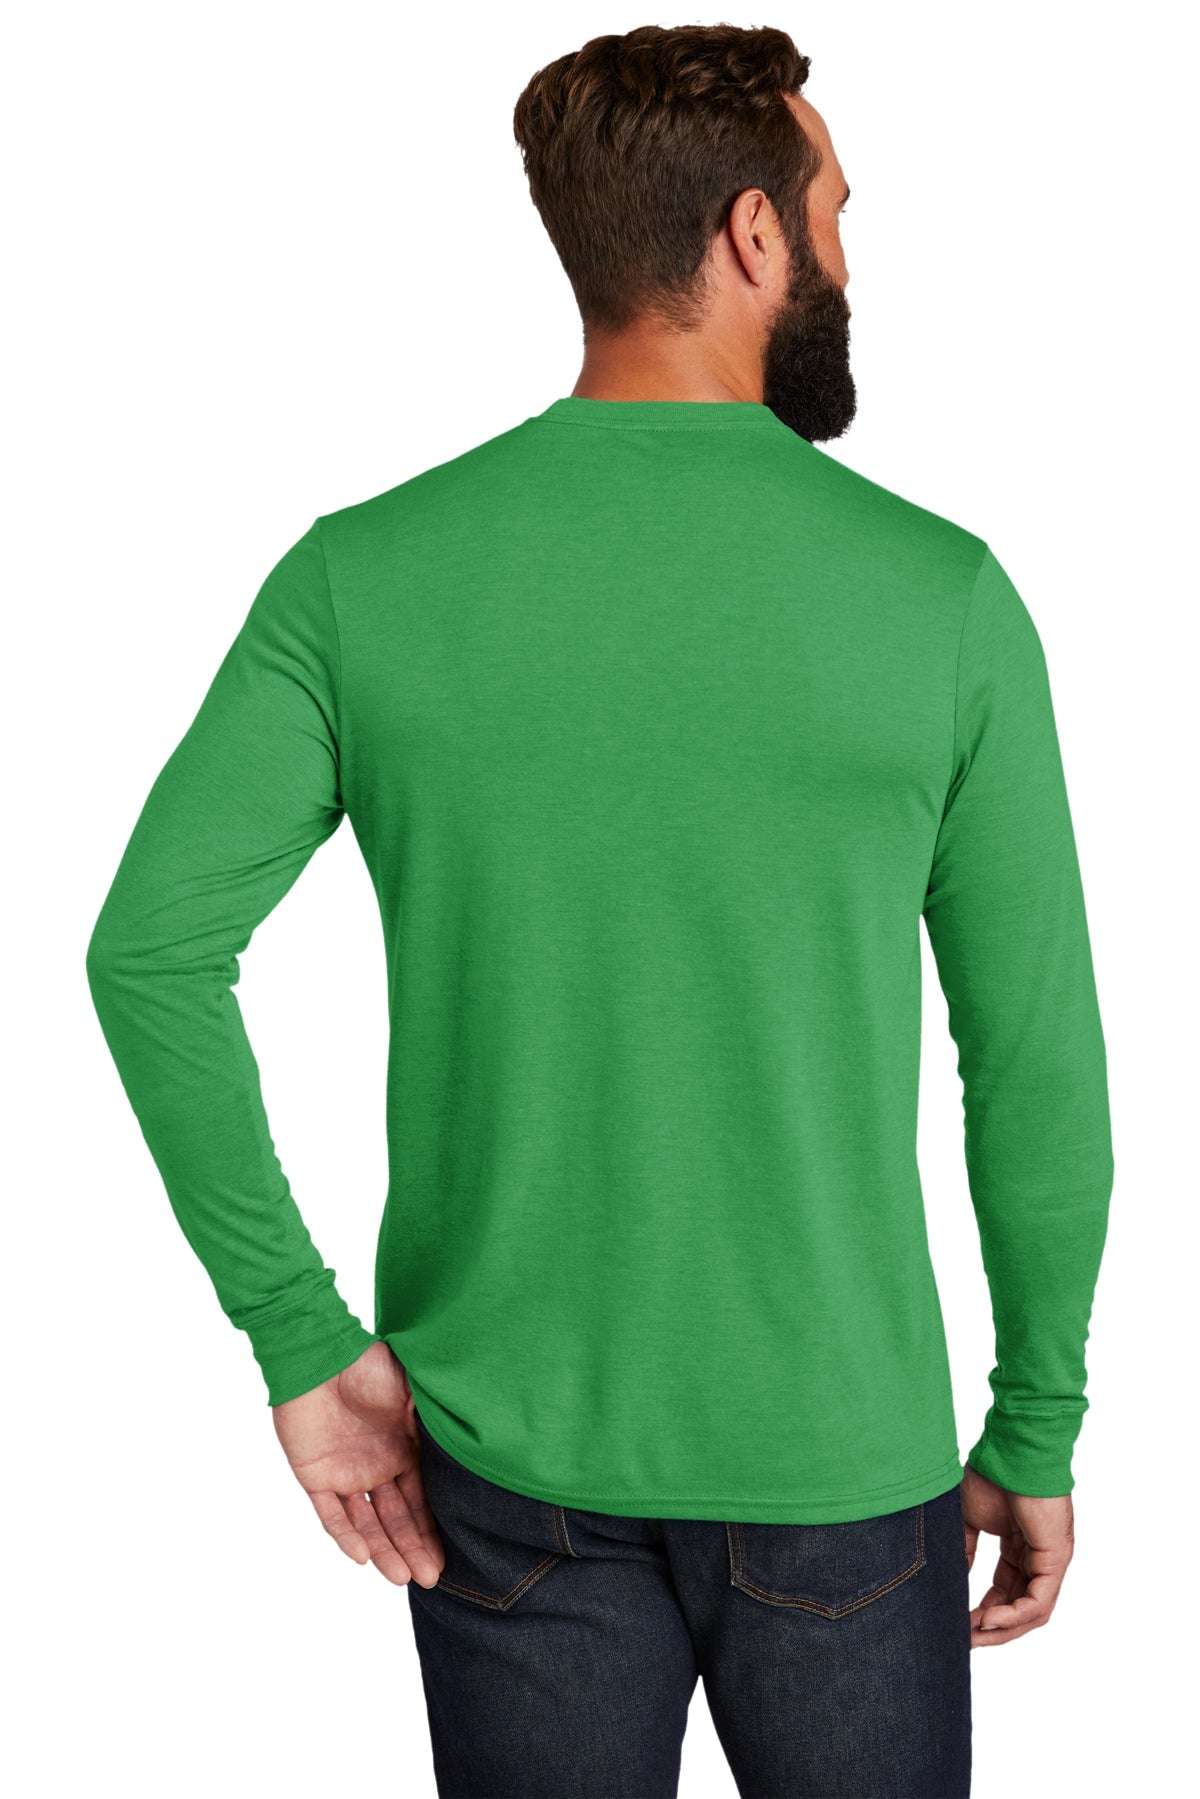 Allmade Unisex Tri-Blend Branded Long Sleeve Tee, Enviro Green